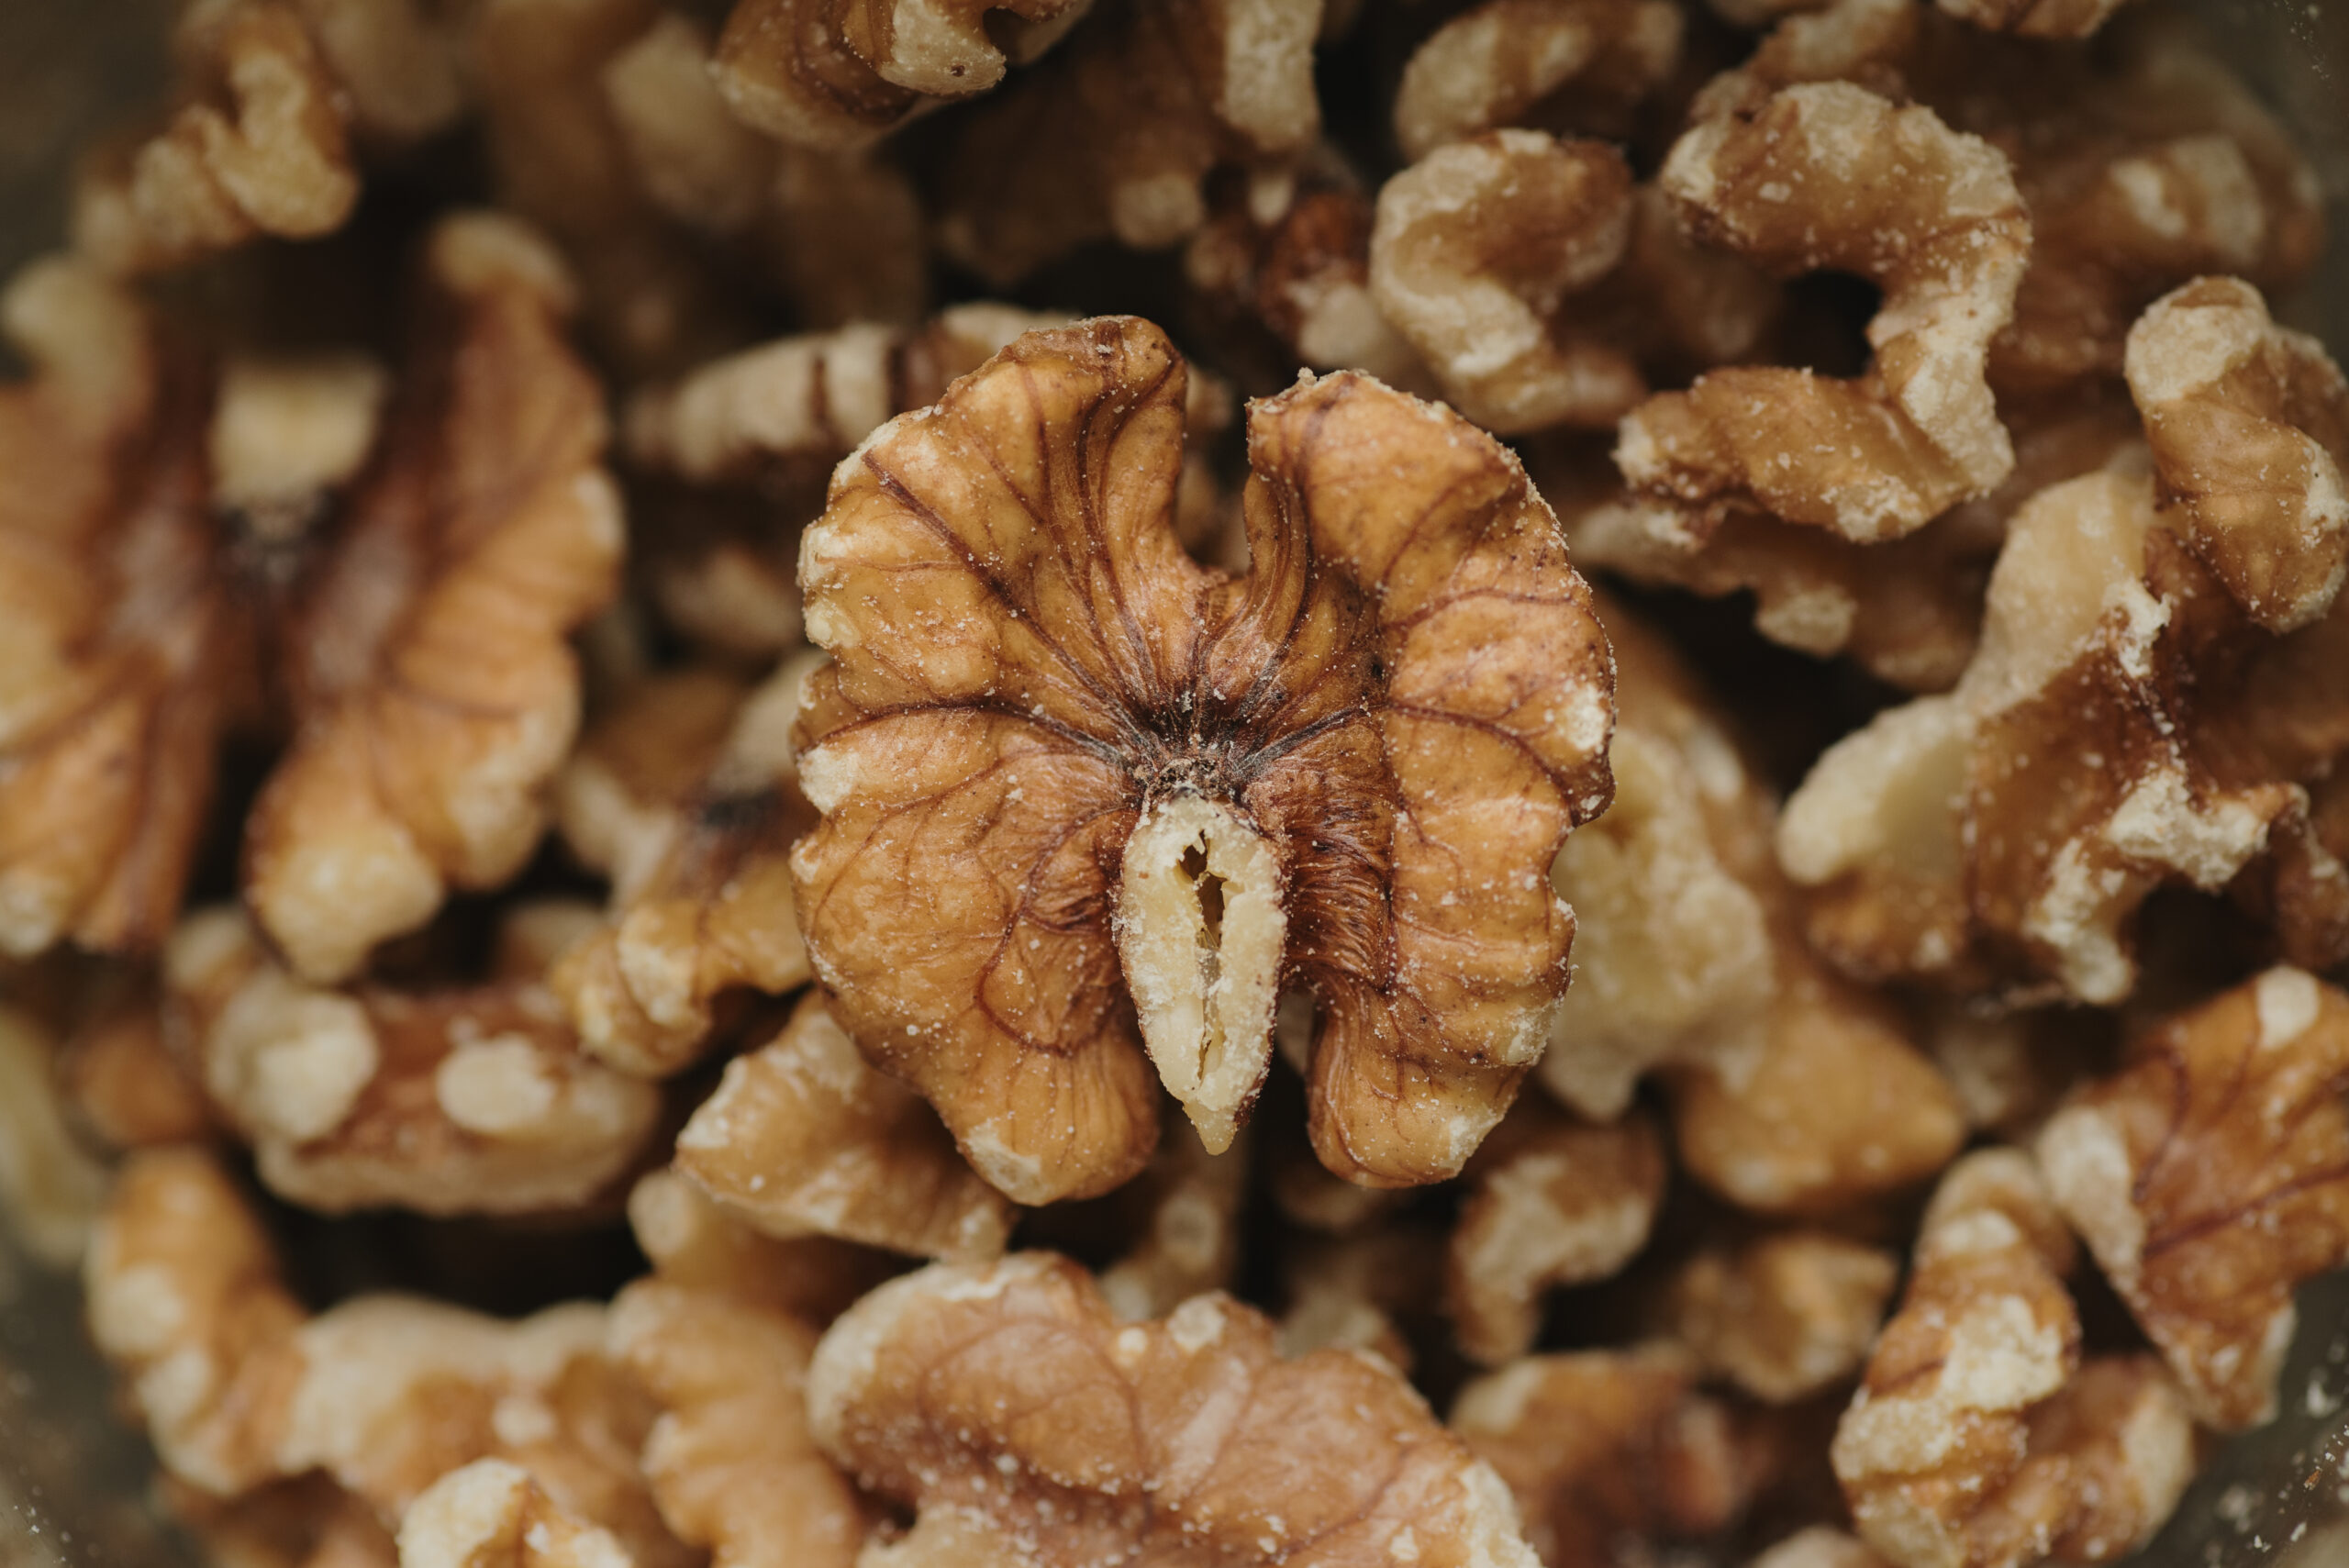 Walnut kernels close-up